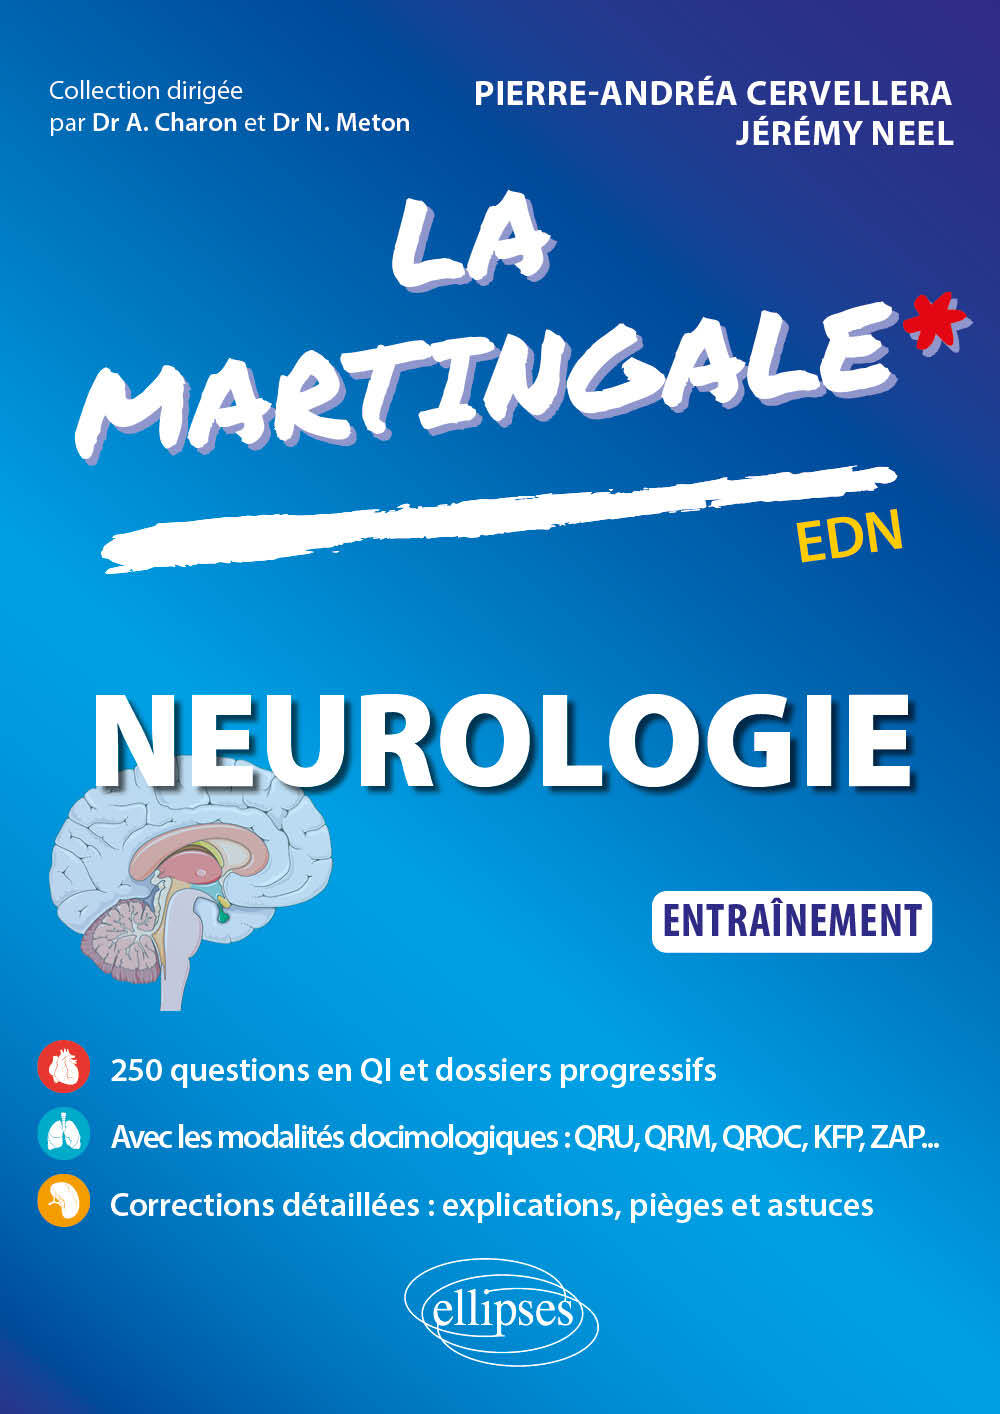 Книга Neurologie Cervellera